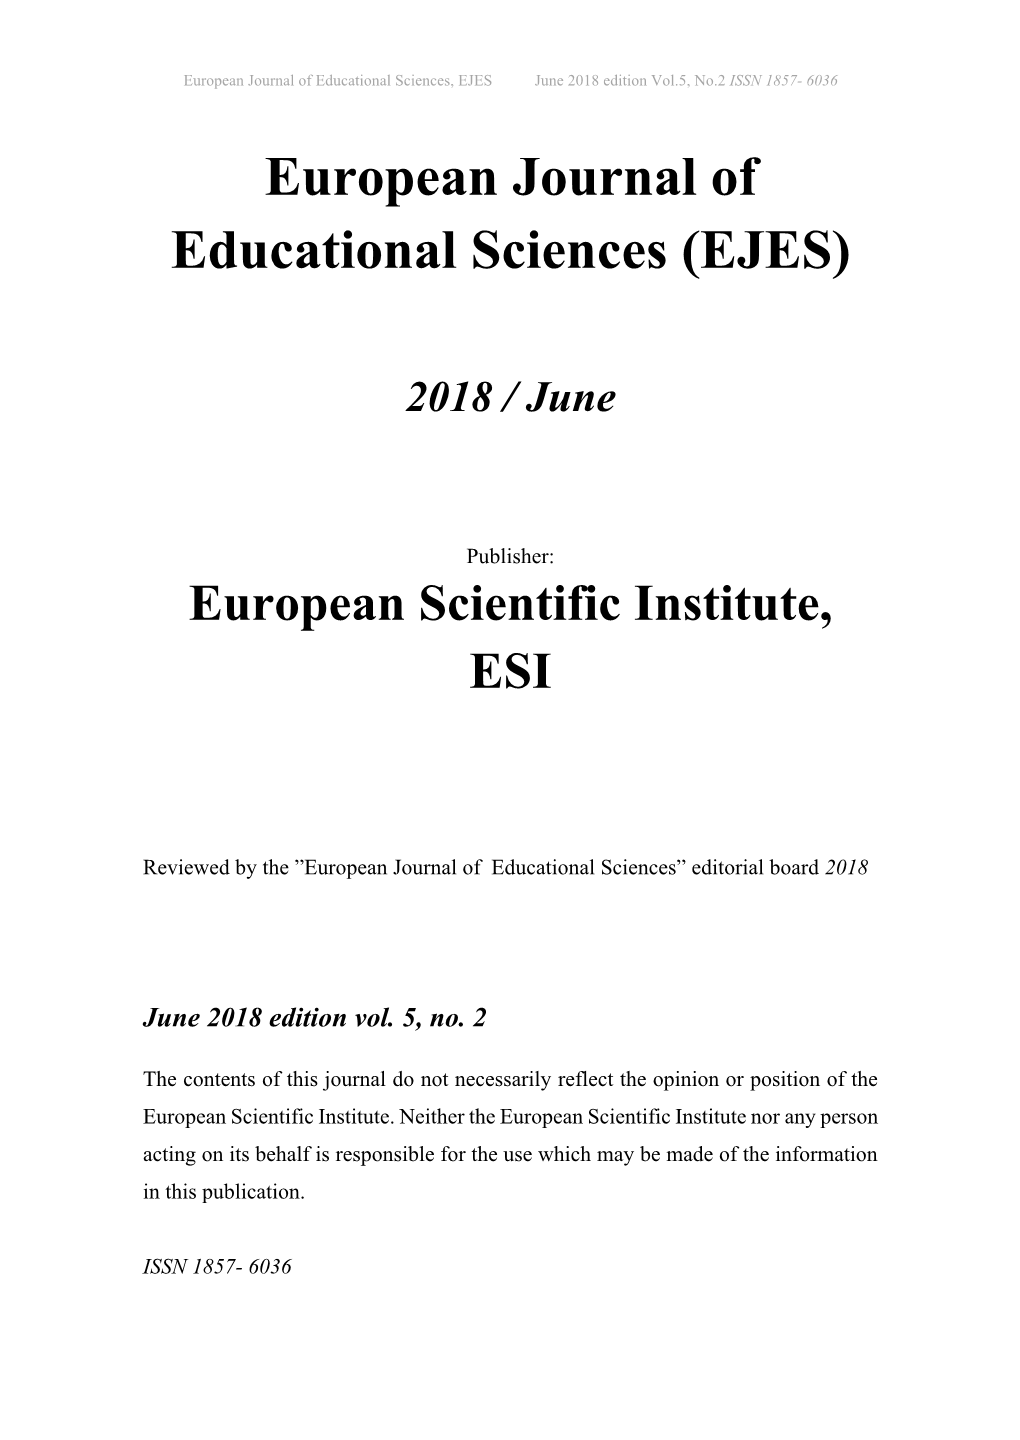 European Journal of Educational Sciences (EJES)